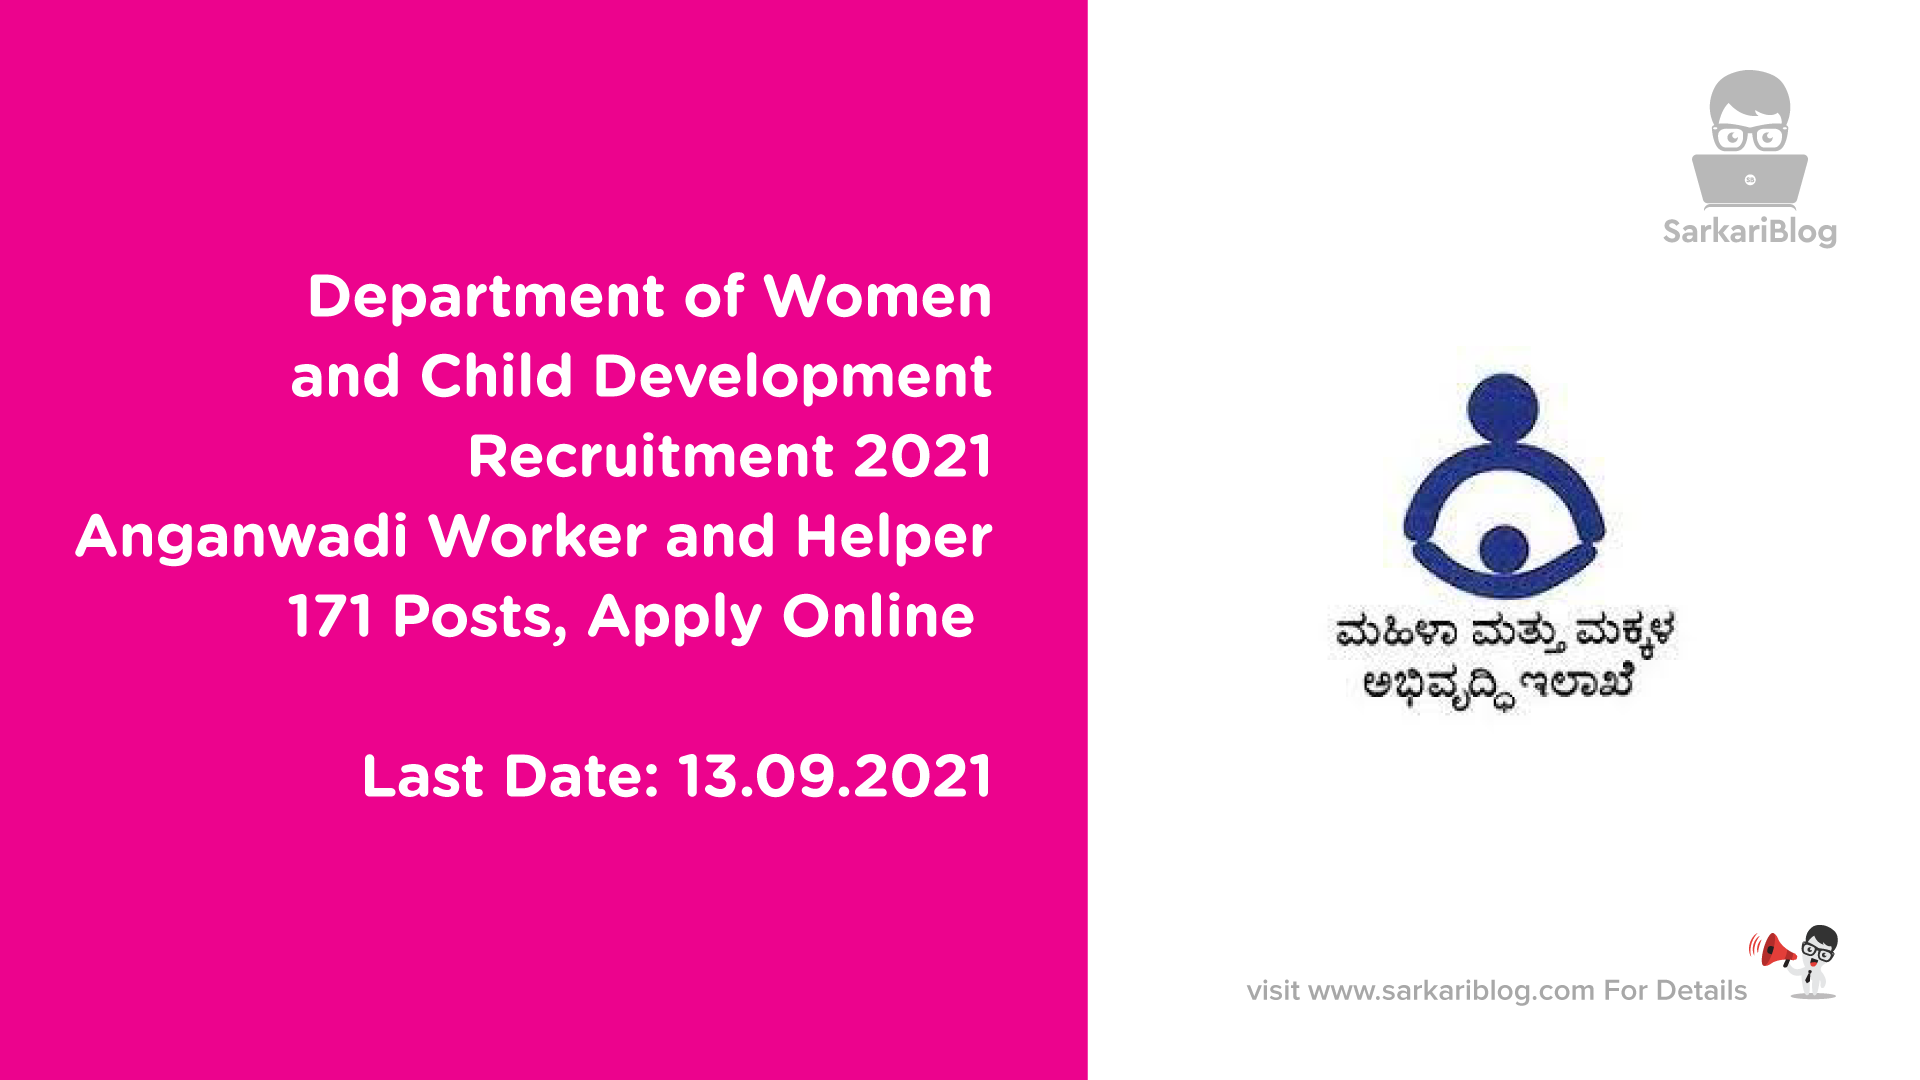 Department of Women and Child Development Recruitment 2021, Anganwadi Worker and Helper, 171 Posts, Apply Online